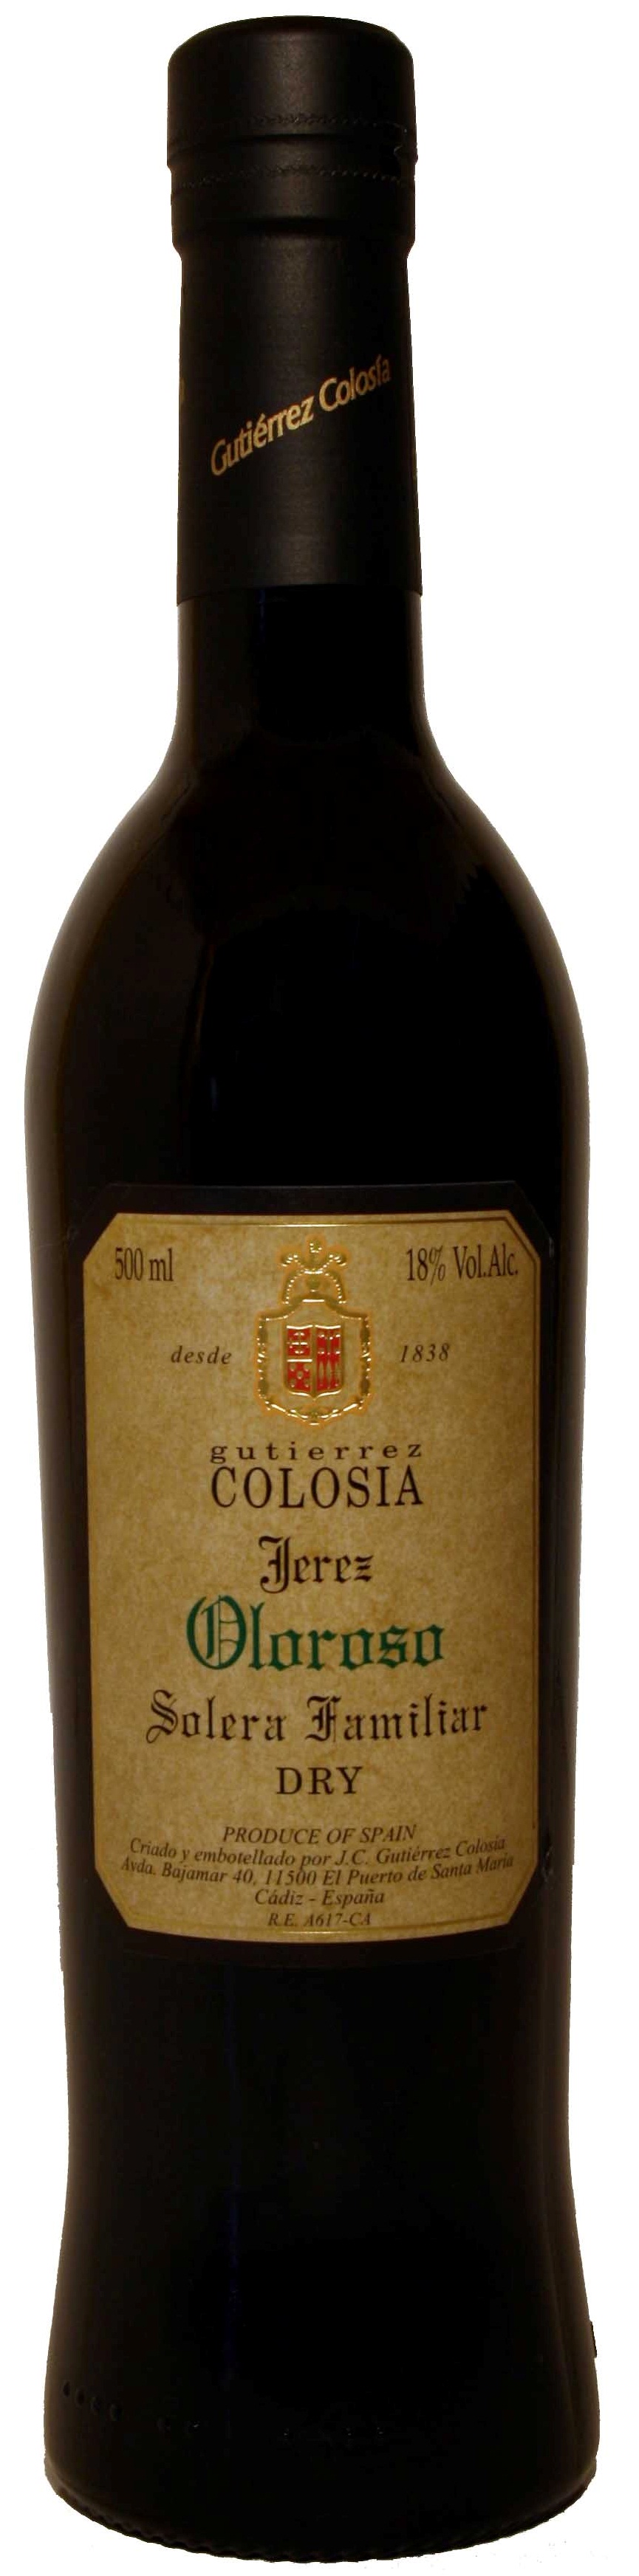 Logo del vino Colosía Solera Familiar Oloroso